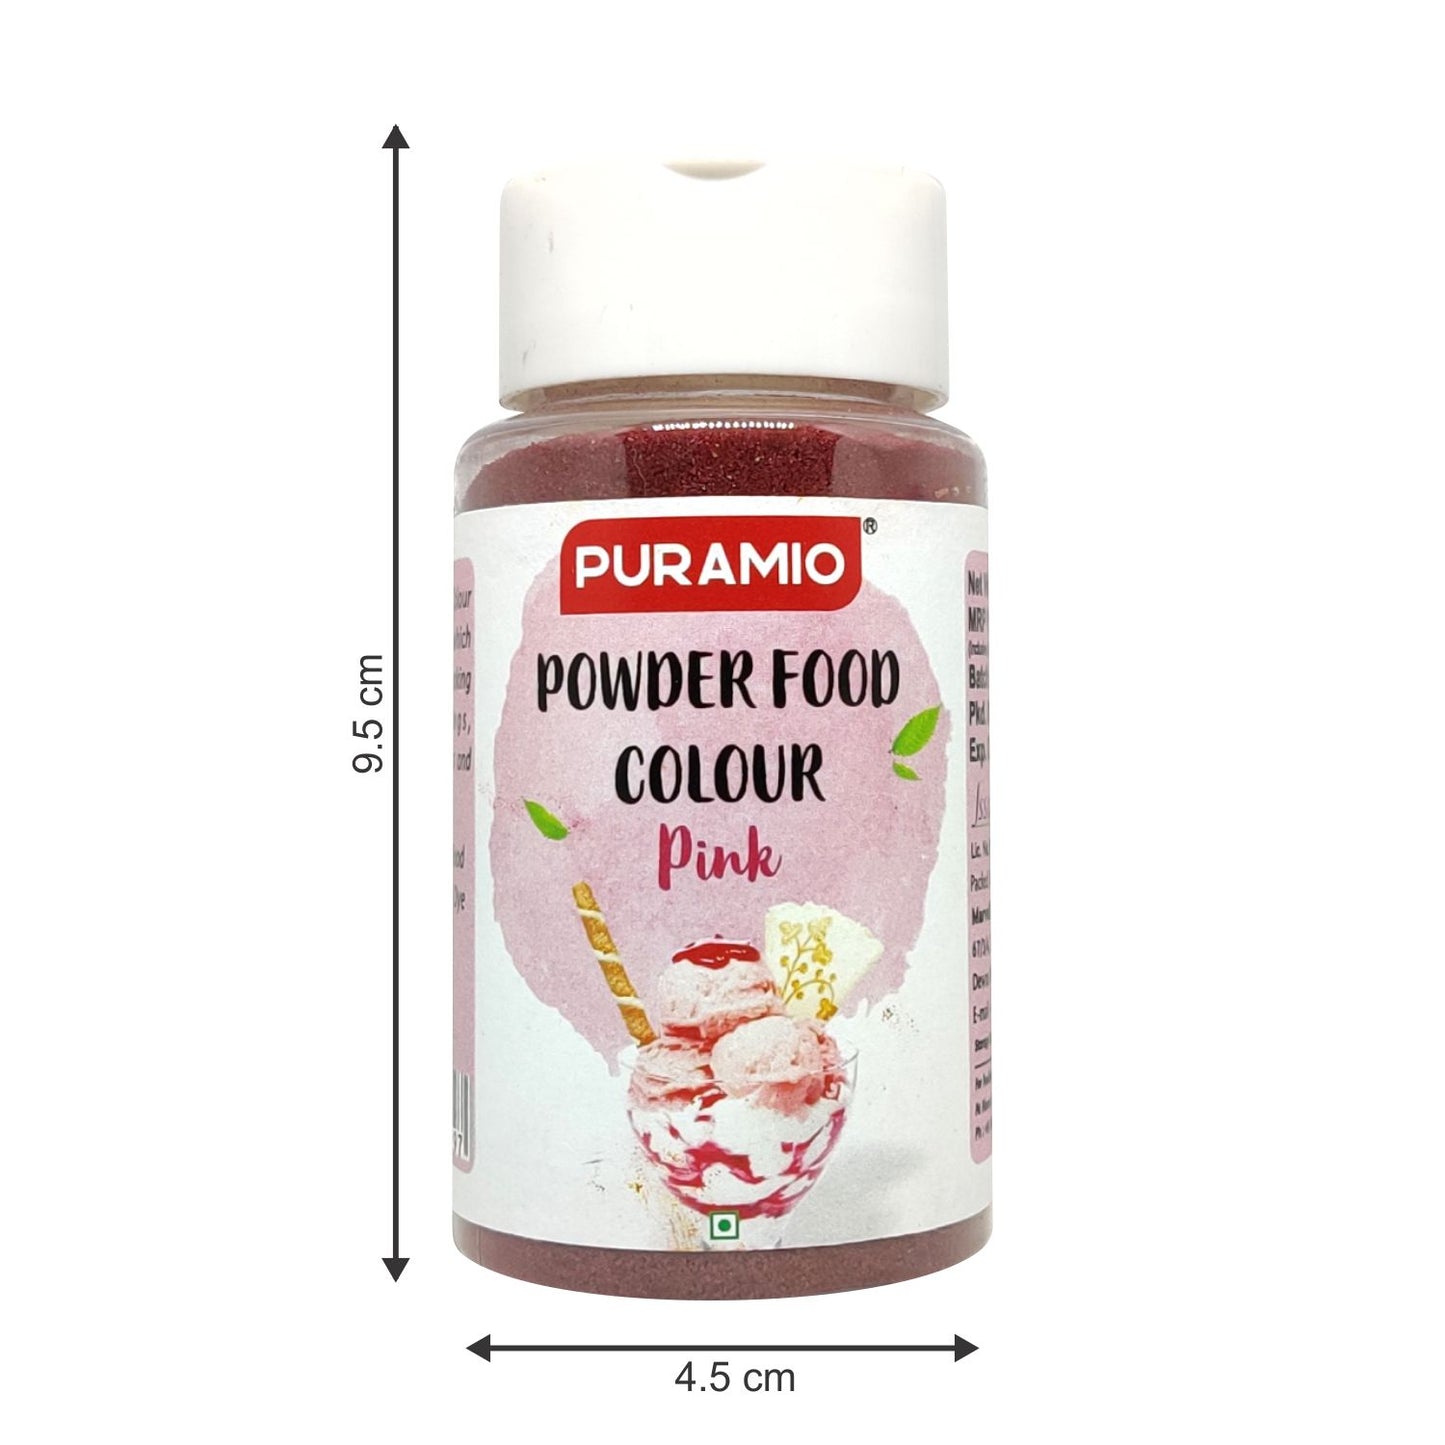 Puramio Powder Food Colour - Pink 125g